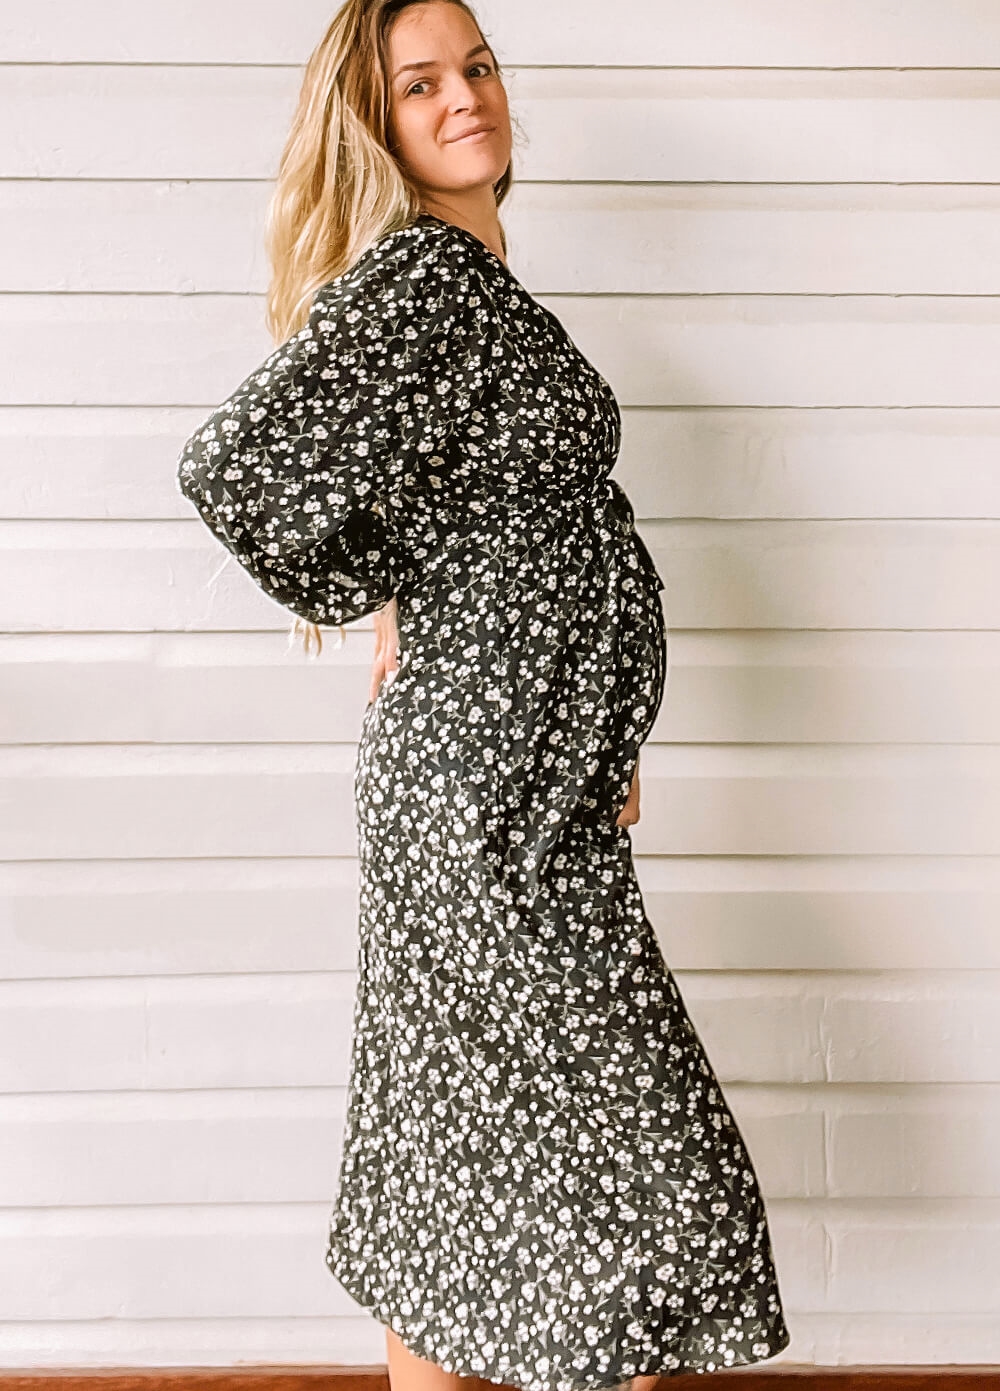 Lait & Co - Evie Maternity Midi Dress in Black Floral